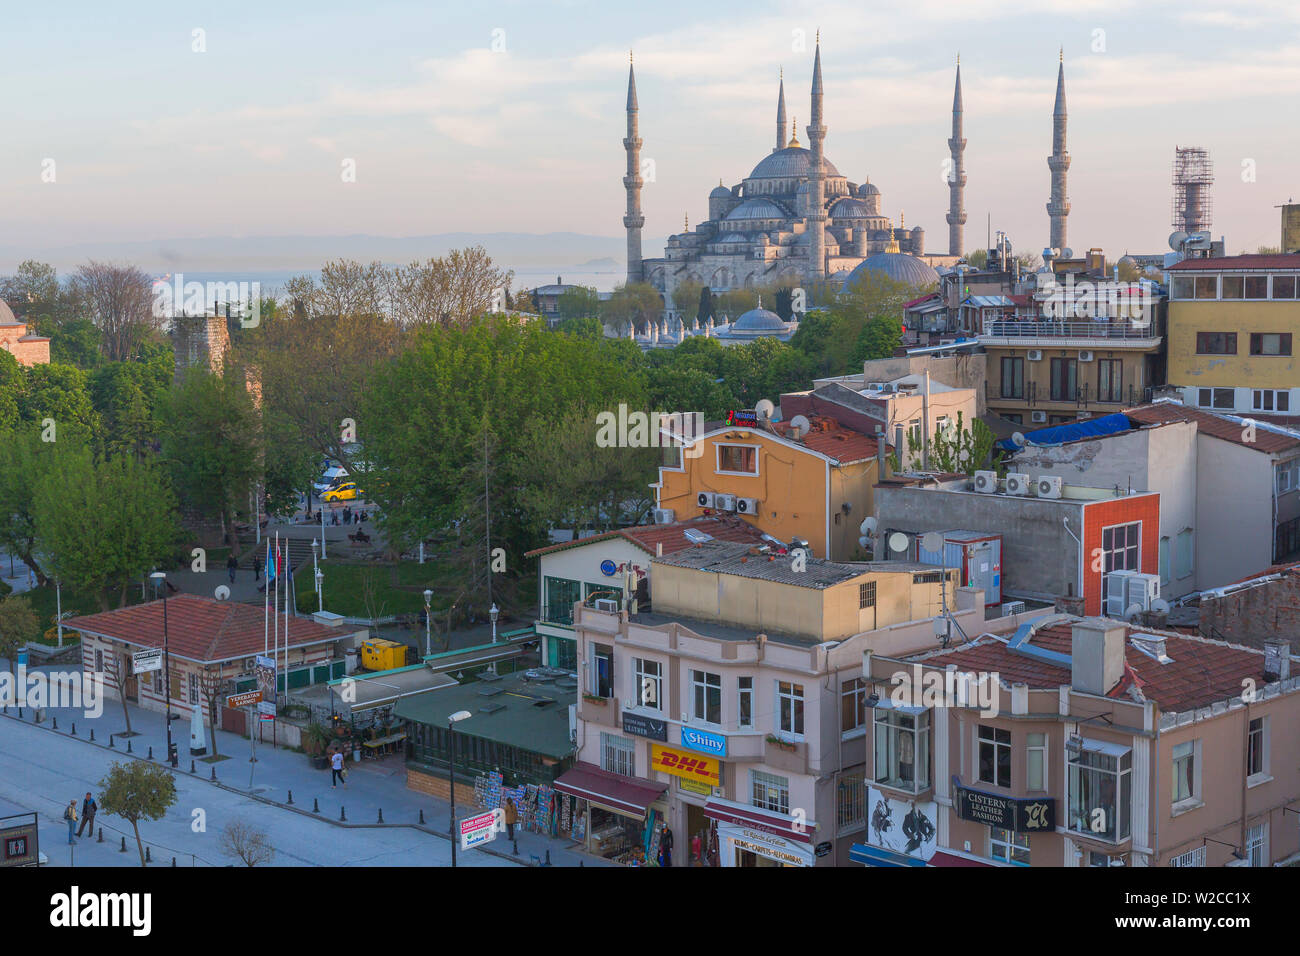 The Blue Mosque (Sultan Ahmet Camii), Sultanahmet, cityscape of Istanbul, Turkey Stock Photo